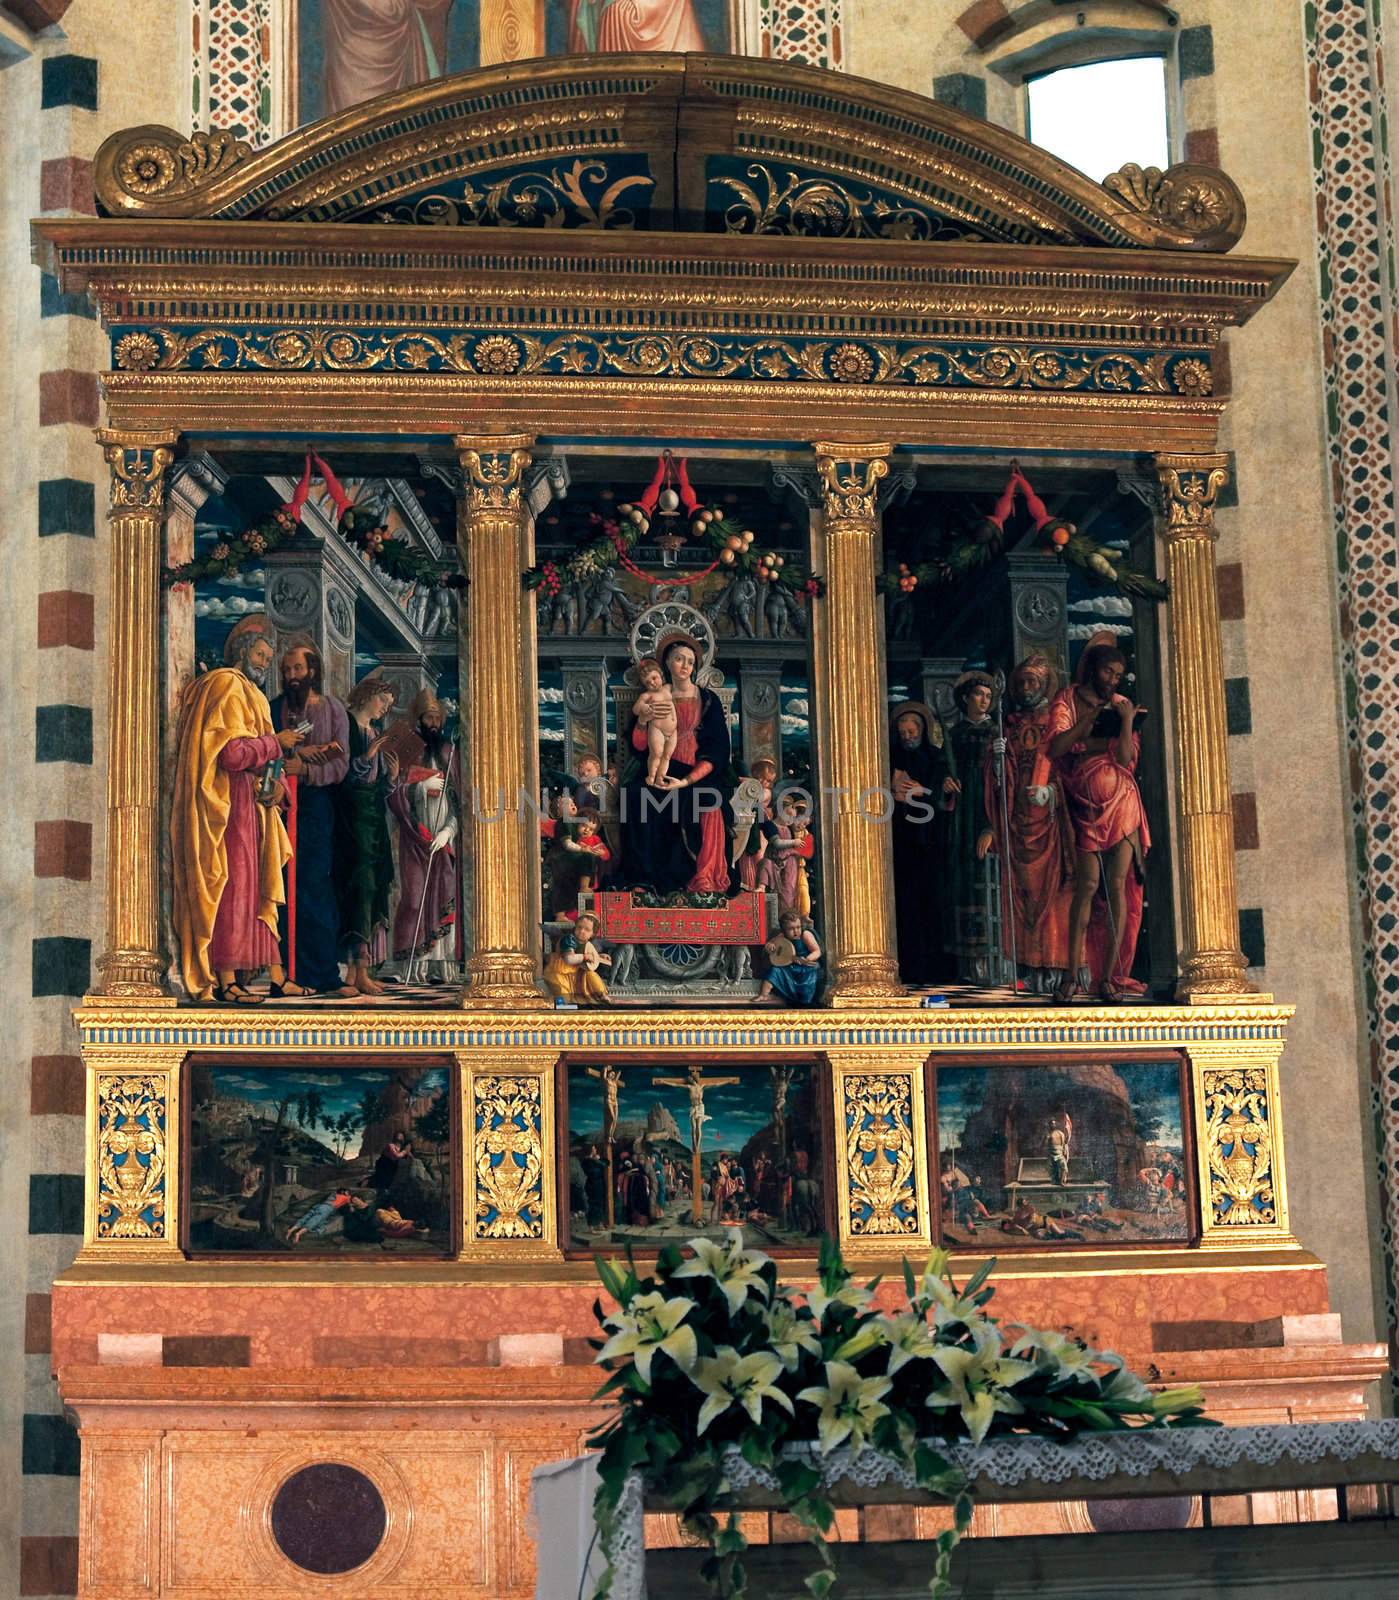 Altar in San Zeno by steheap